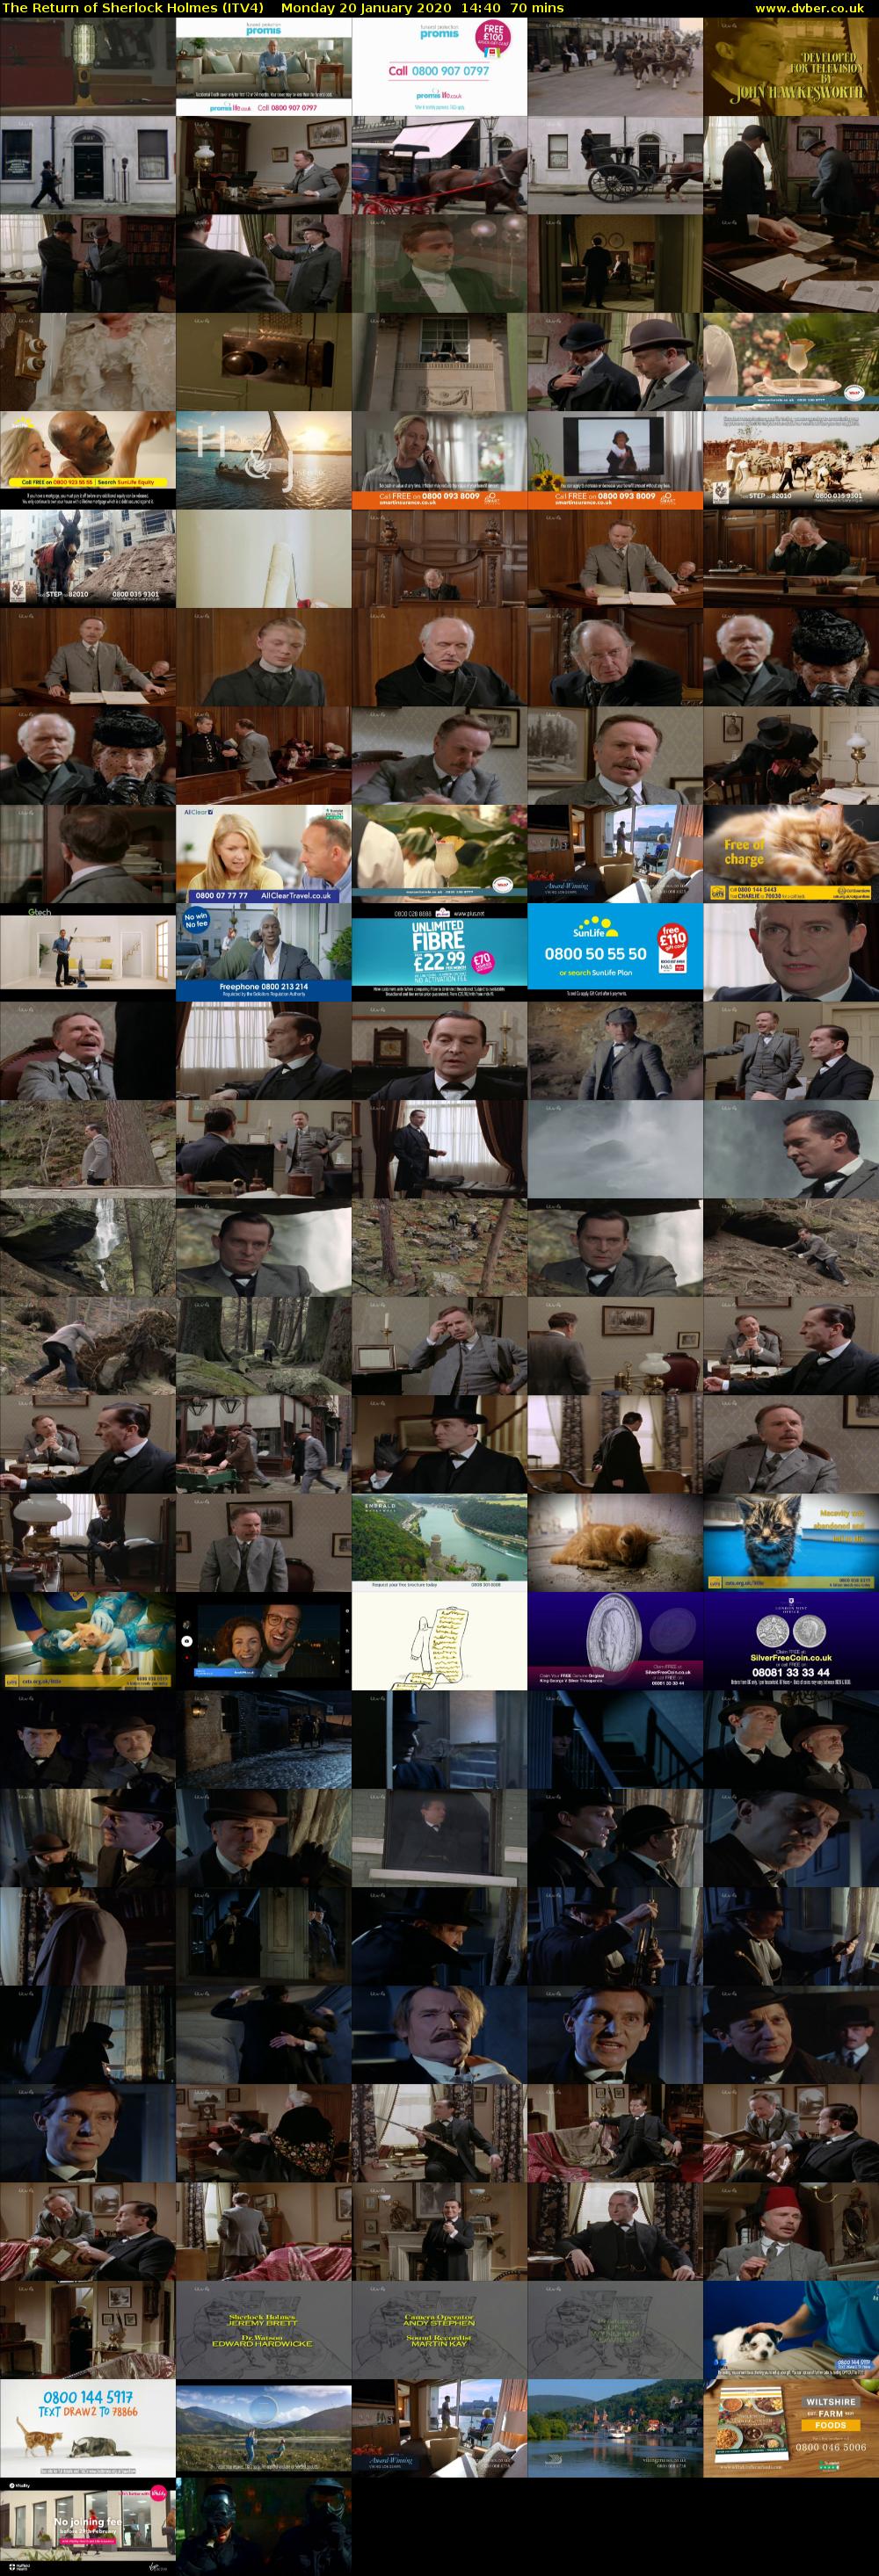 The Return of Sherlock Holmes (ITV4) Monday 20 January 2020 14:40 - 15:50